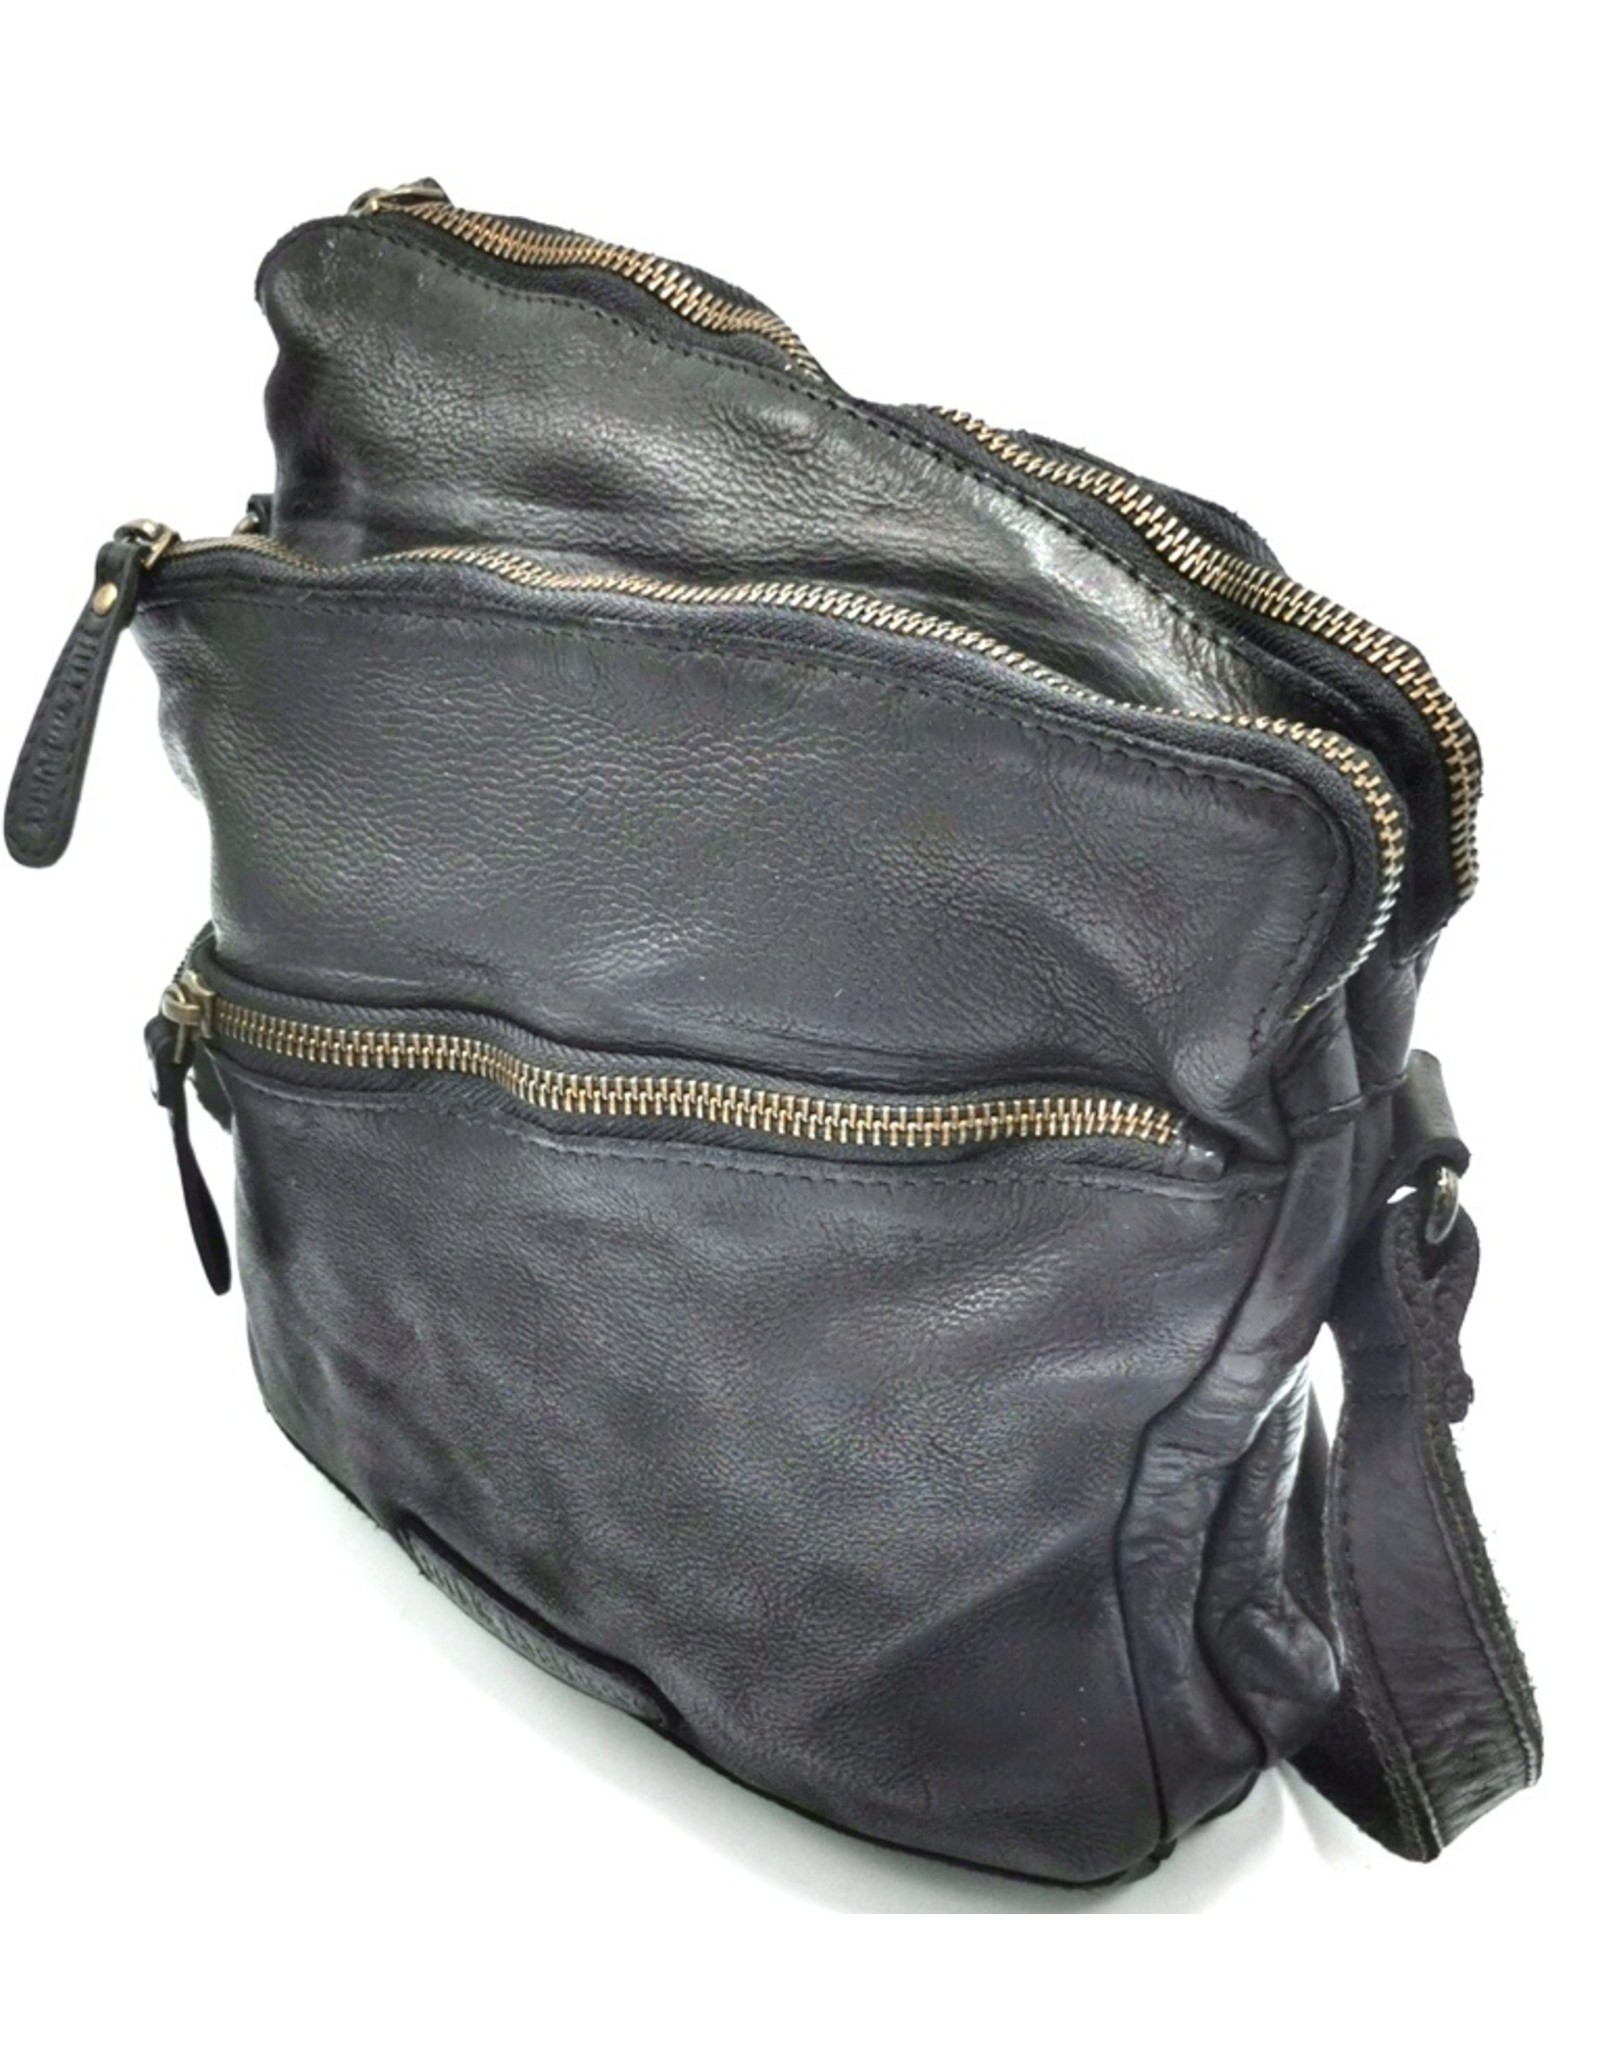 HillBurry Leather Shoulder bags  Leather crossbody bags - HillBurry Smart Crossbody Bag Washed Leather Black